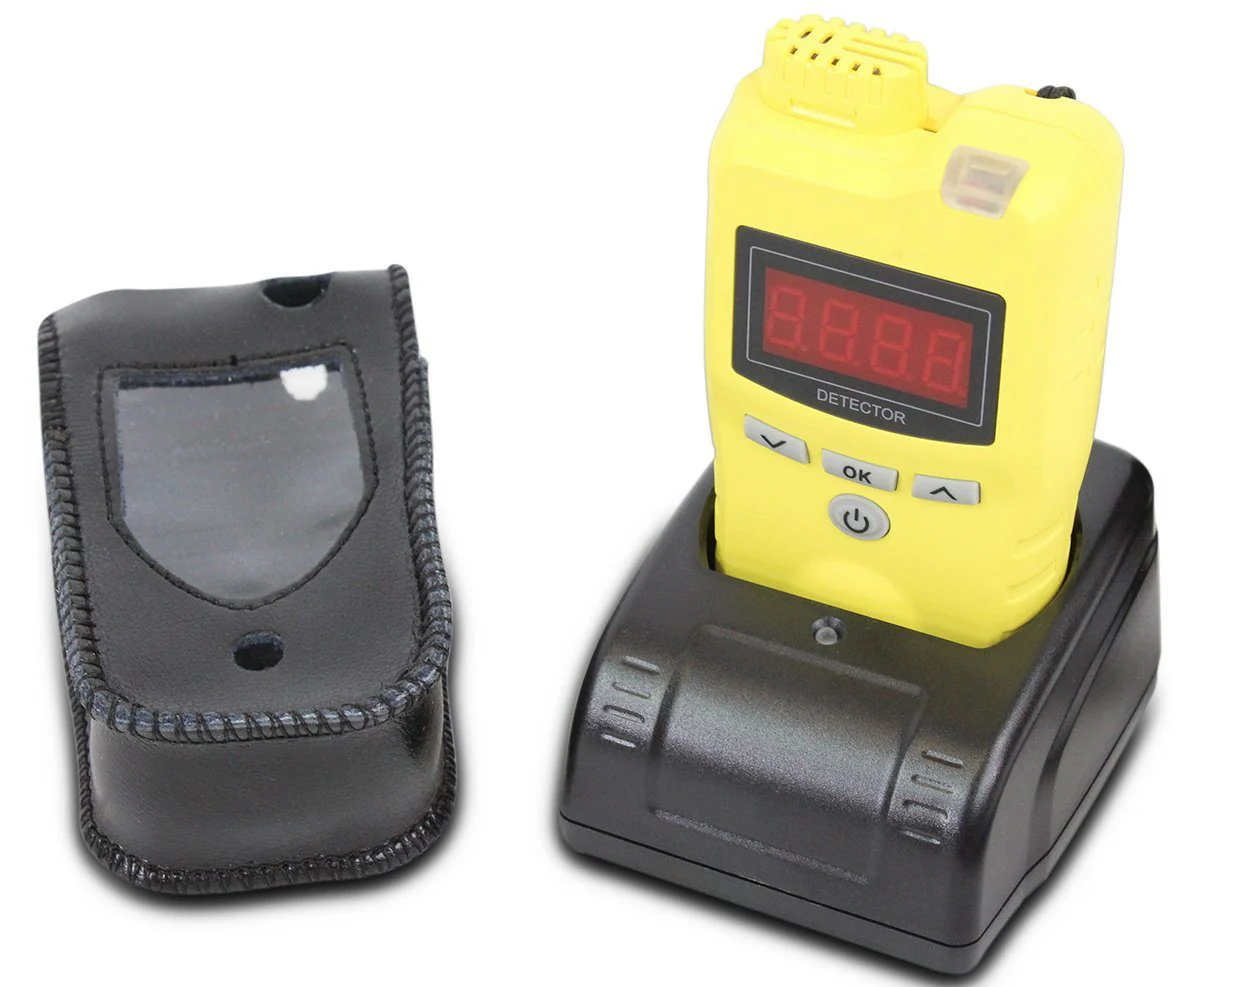 Portable Butane Leak Detector (C4H10) Questions & Answers